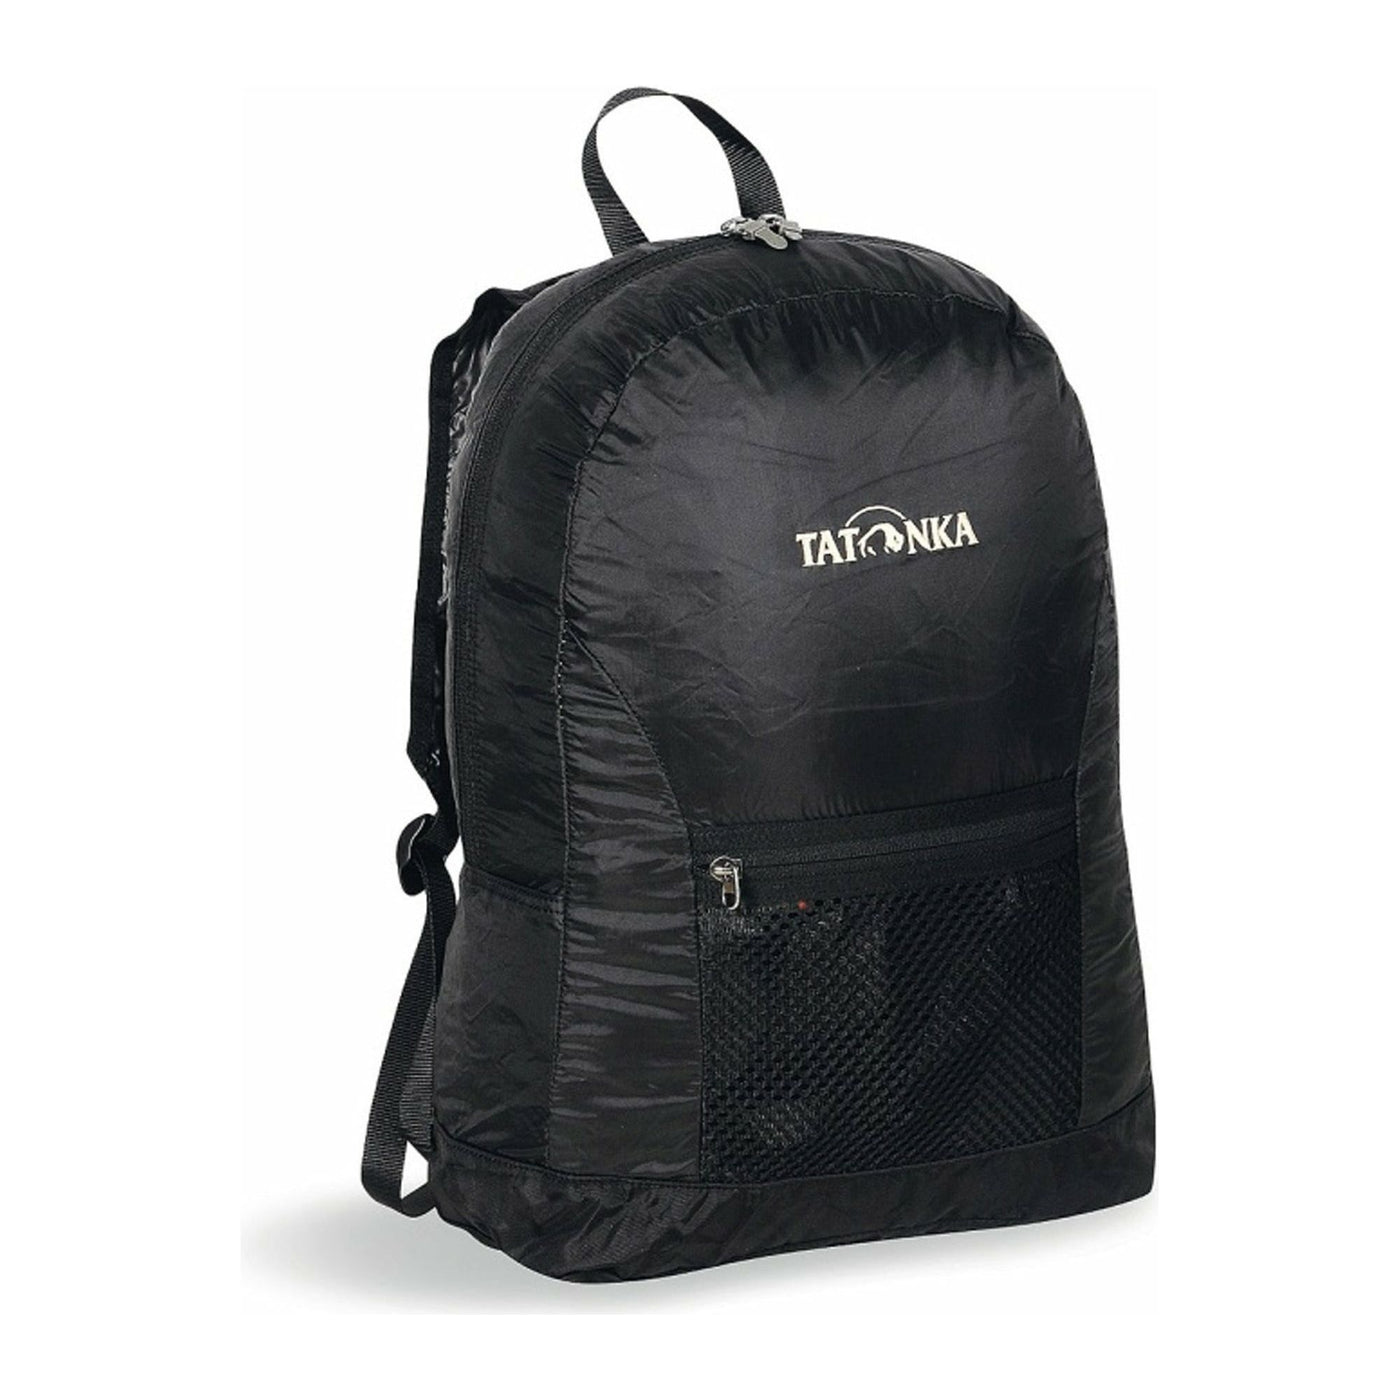 Tatonka Superlight Packable Backpack